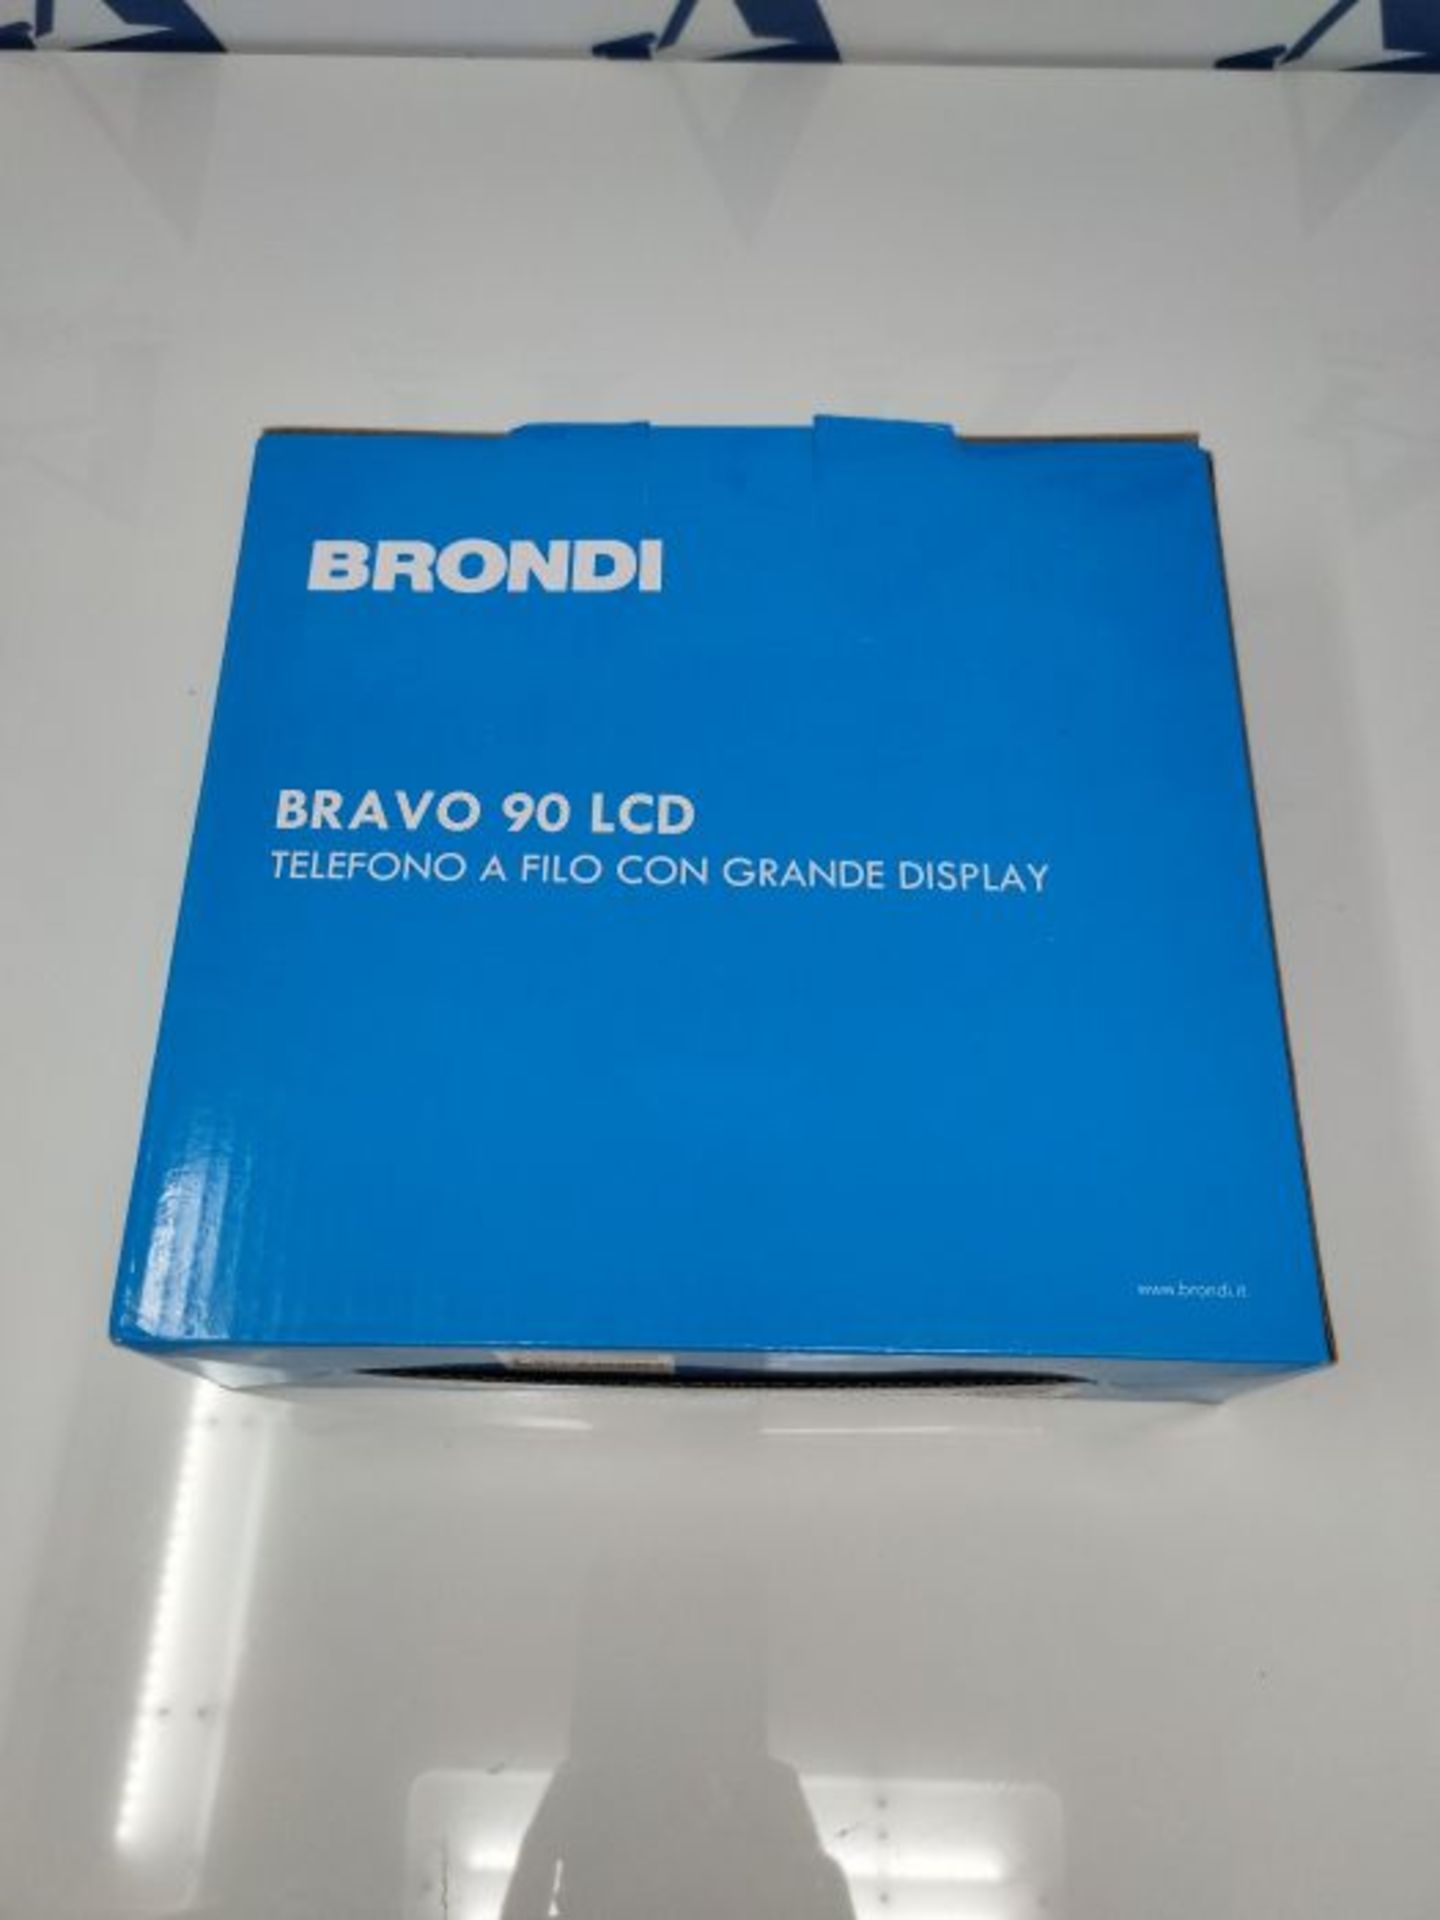 Brondi Bravo 90 LCD Telefono Fisso, Nero - Image 2 of 3